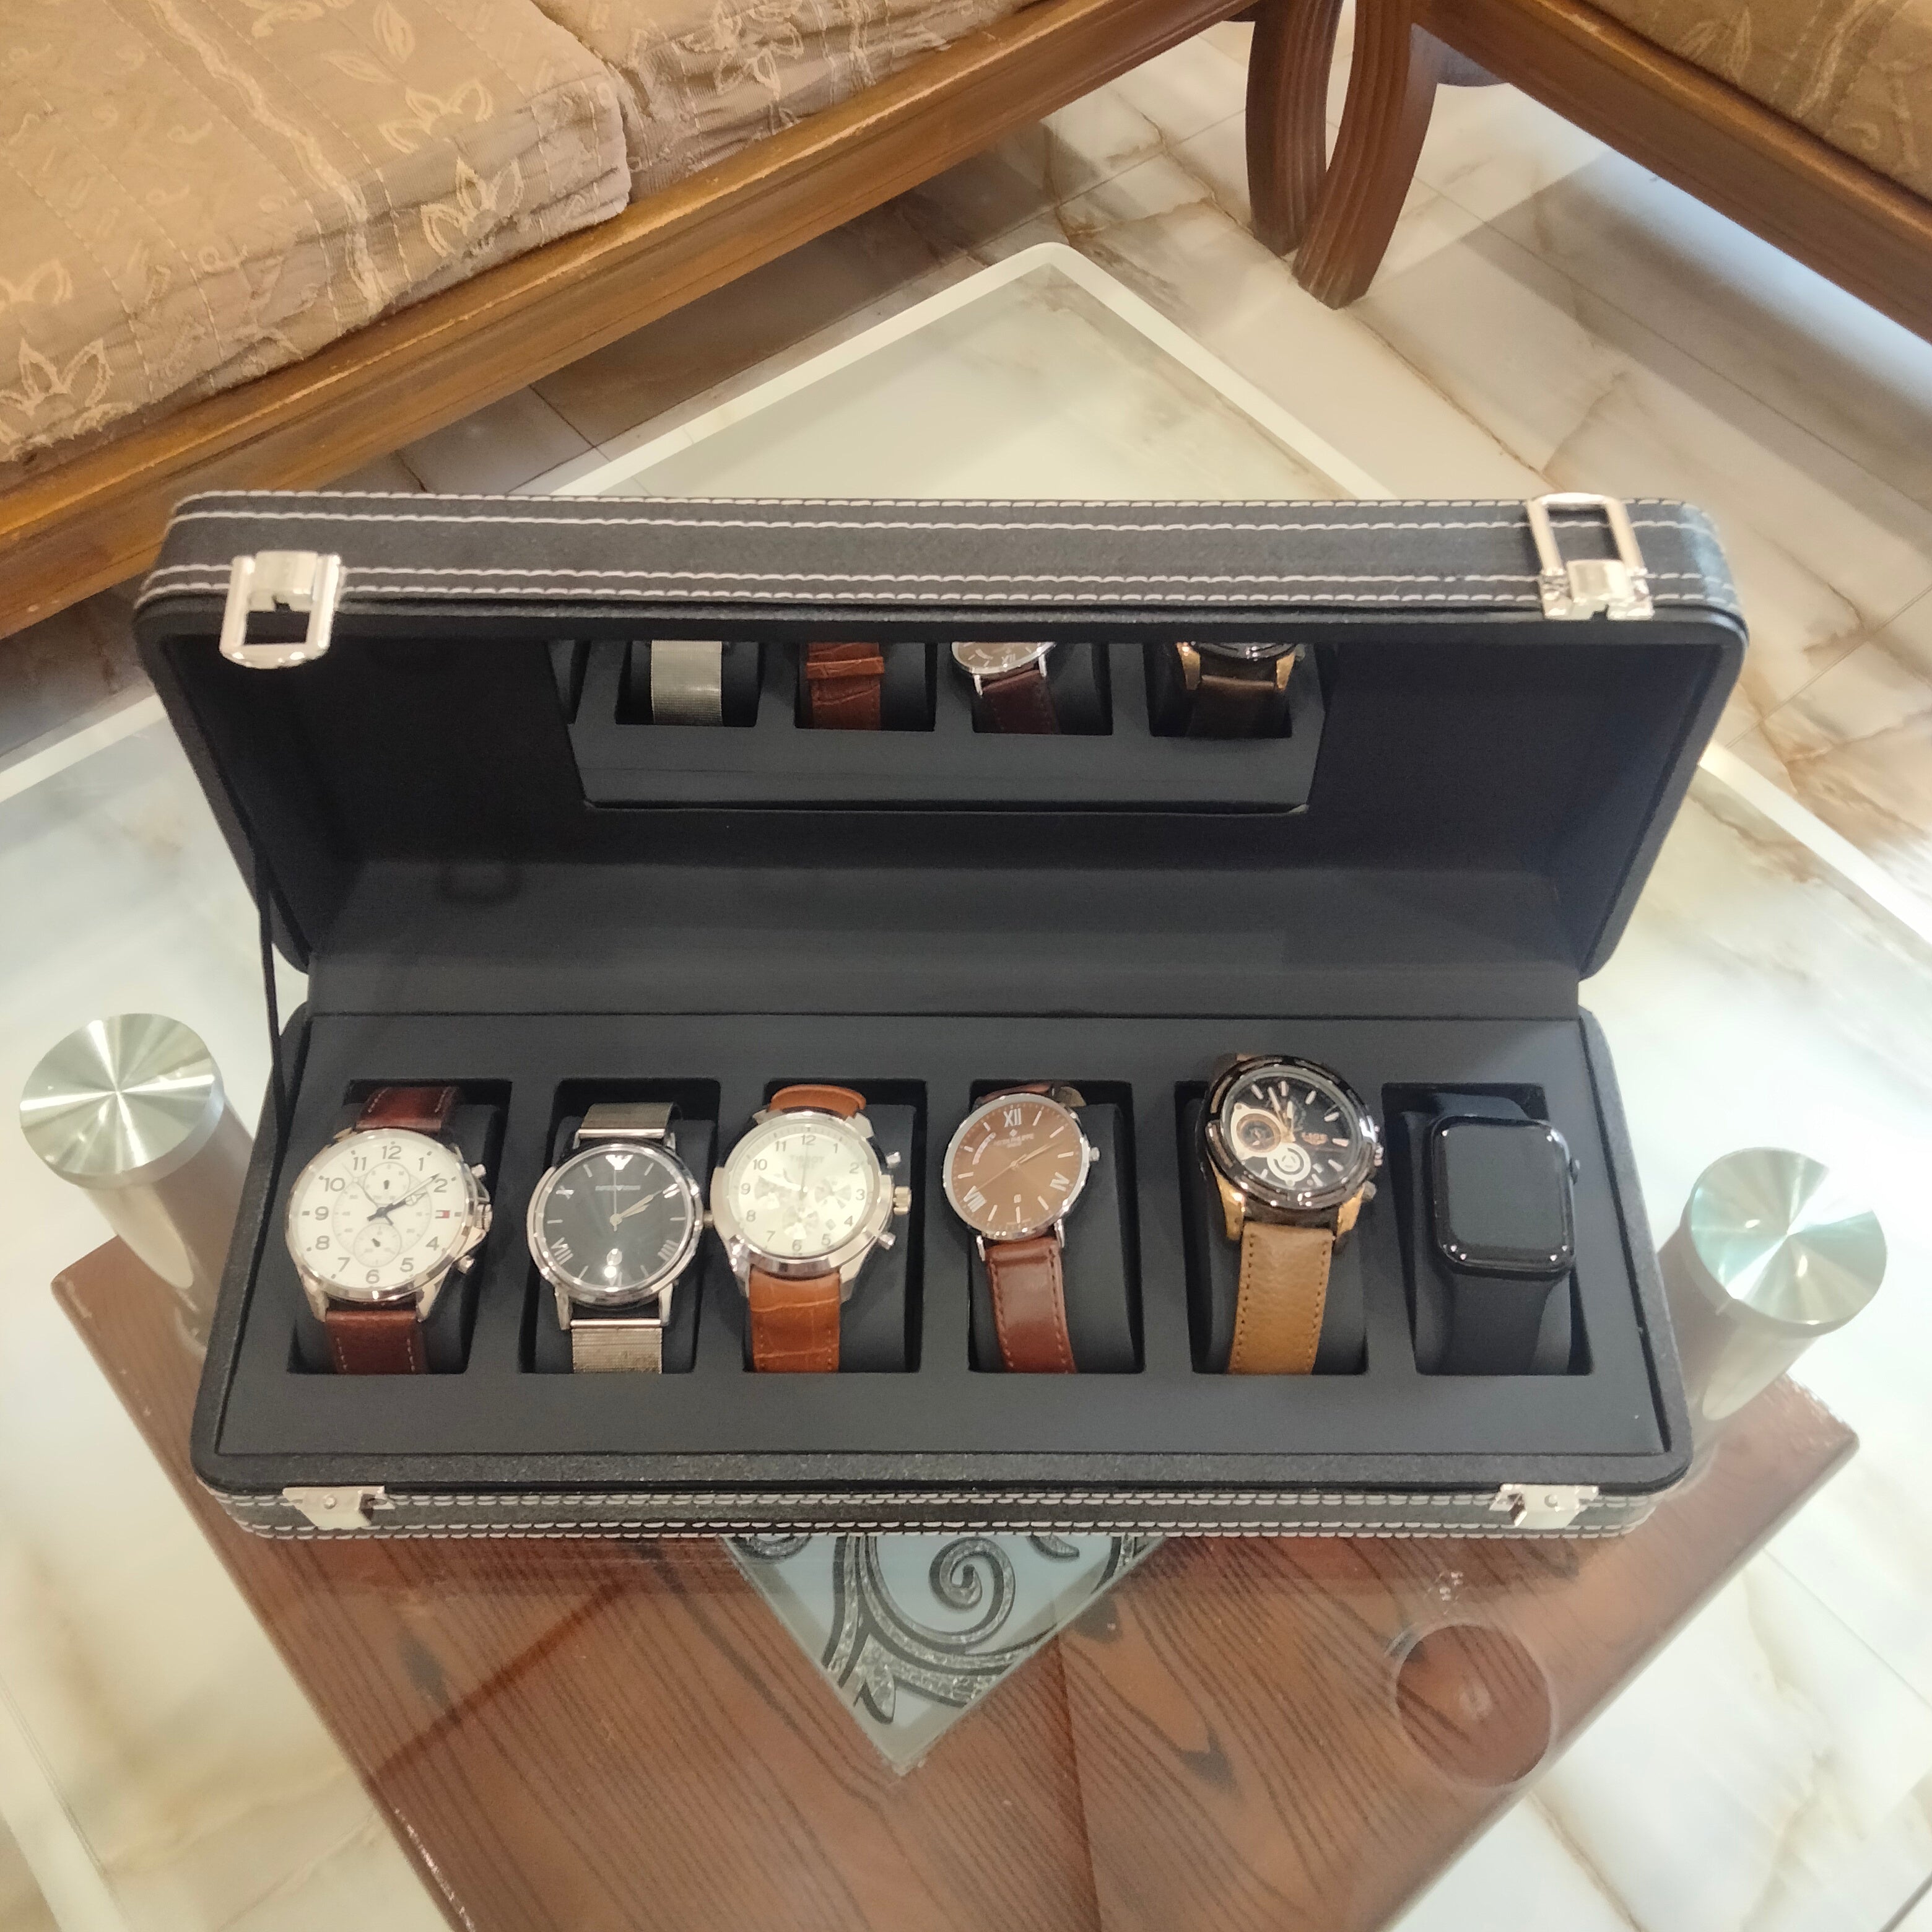 Premium Quality PU leather watch display box or watch organizer